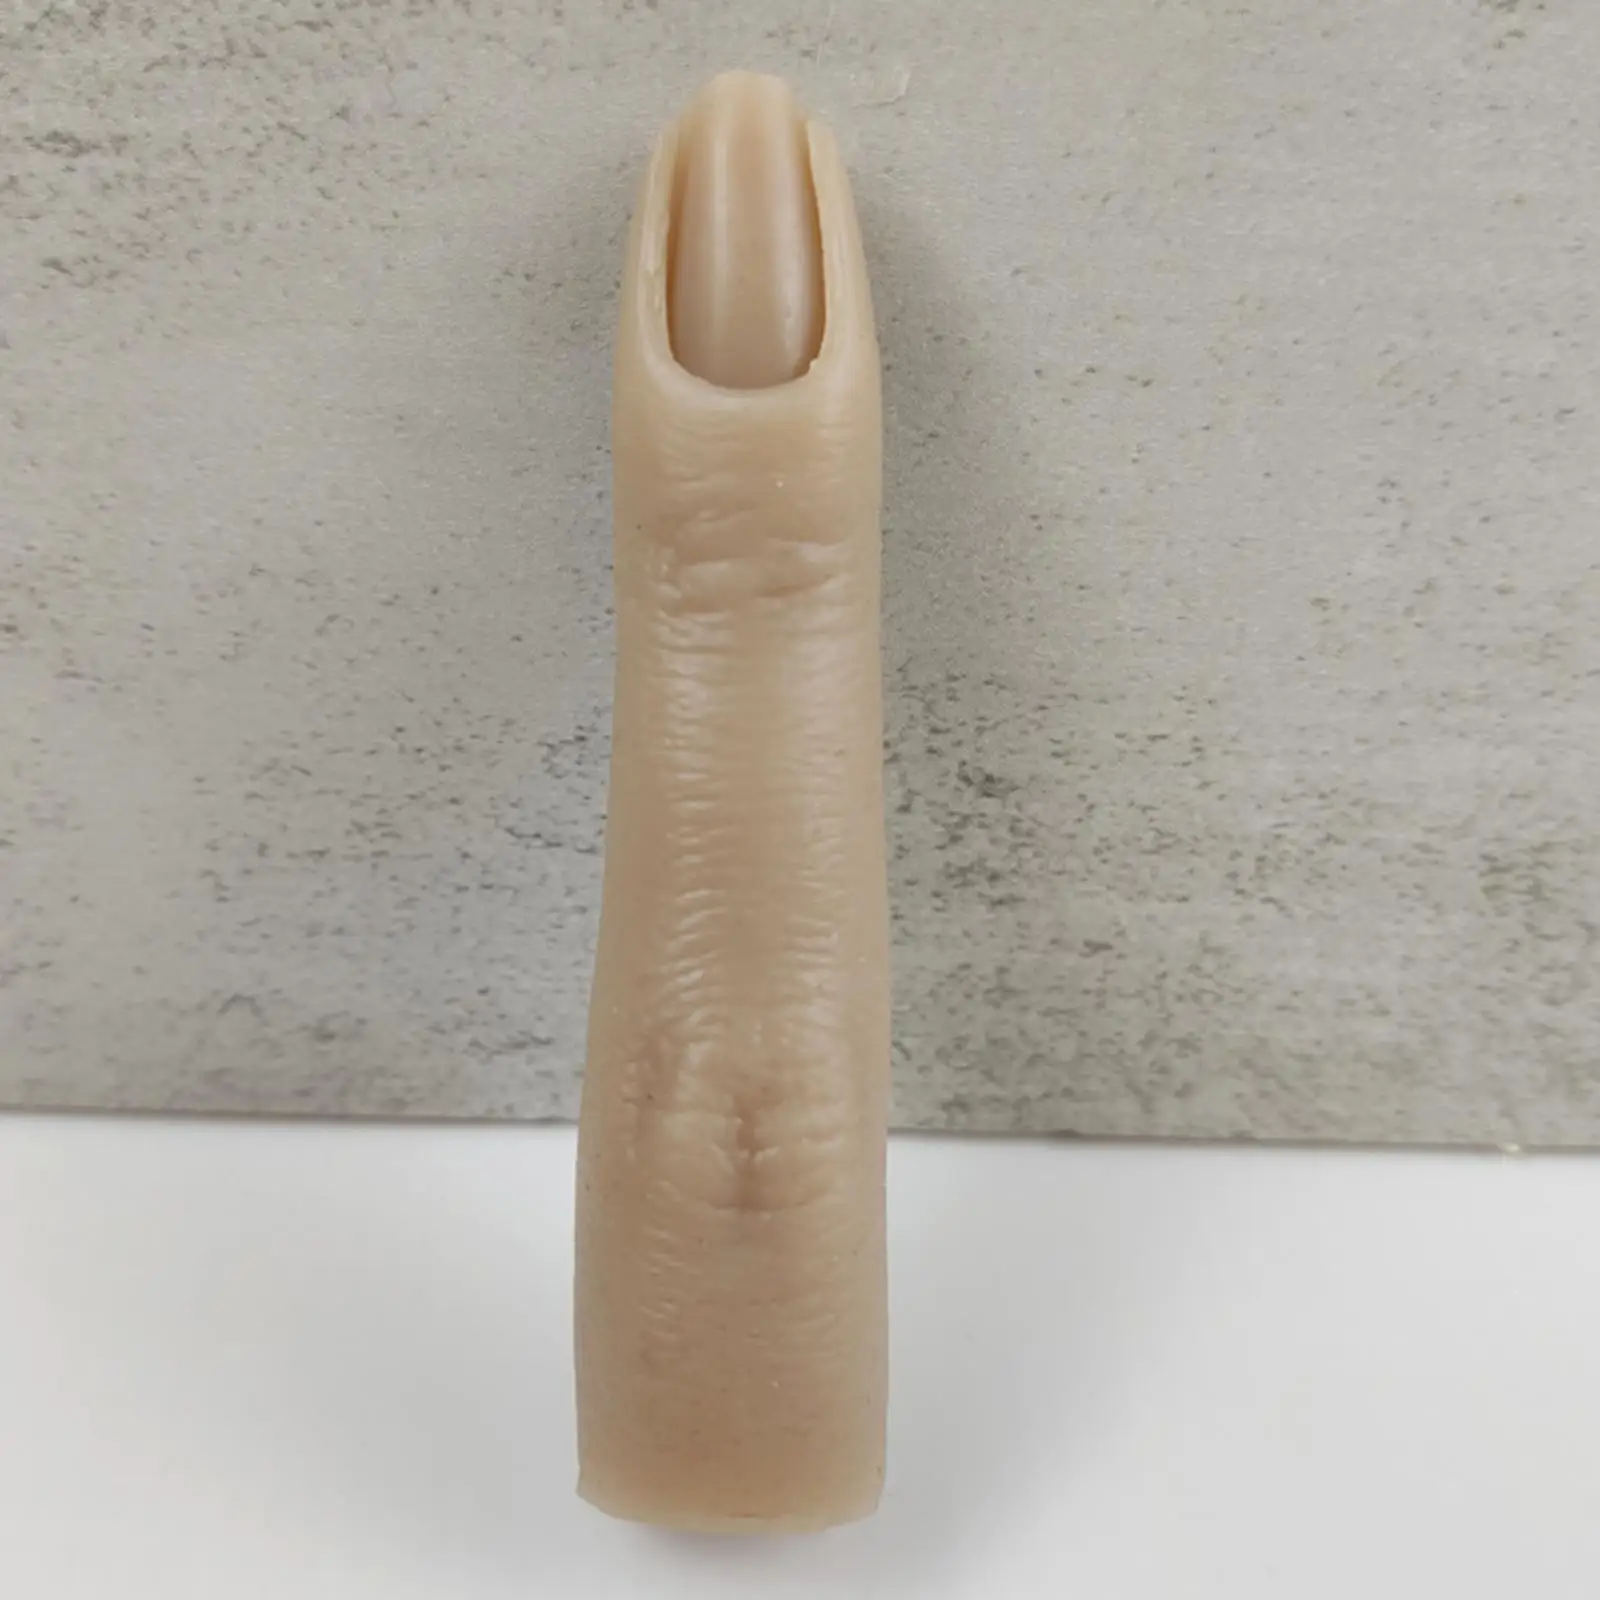 Nail Art Practice Finger Fake Finger Manicure Supplies Professional Bendable